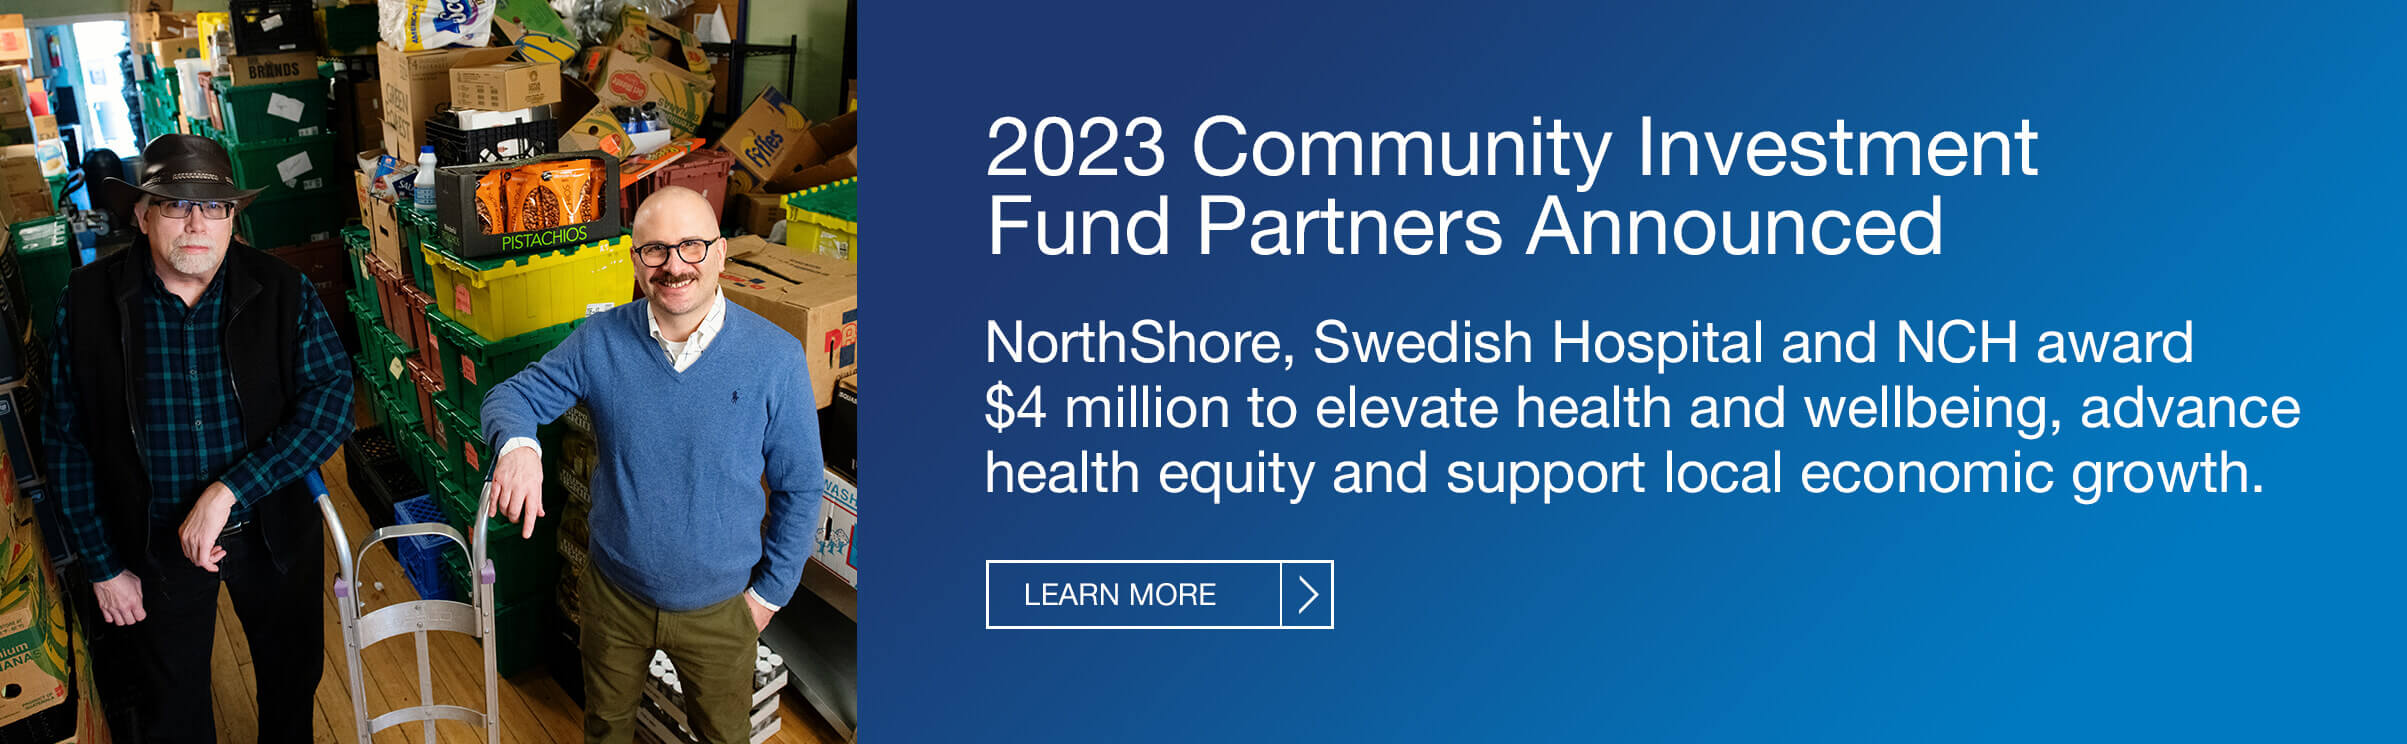 Community Investment Fund 